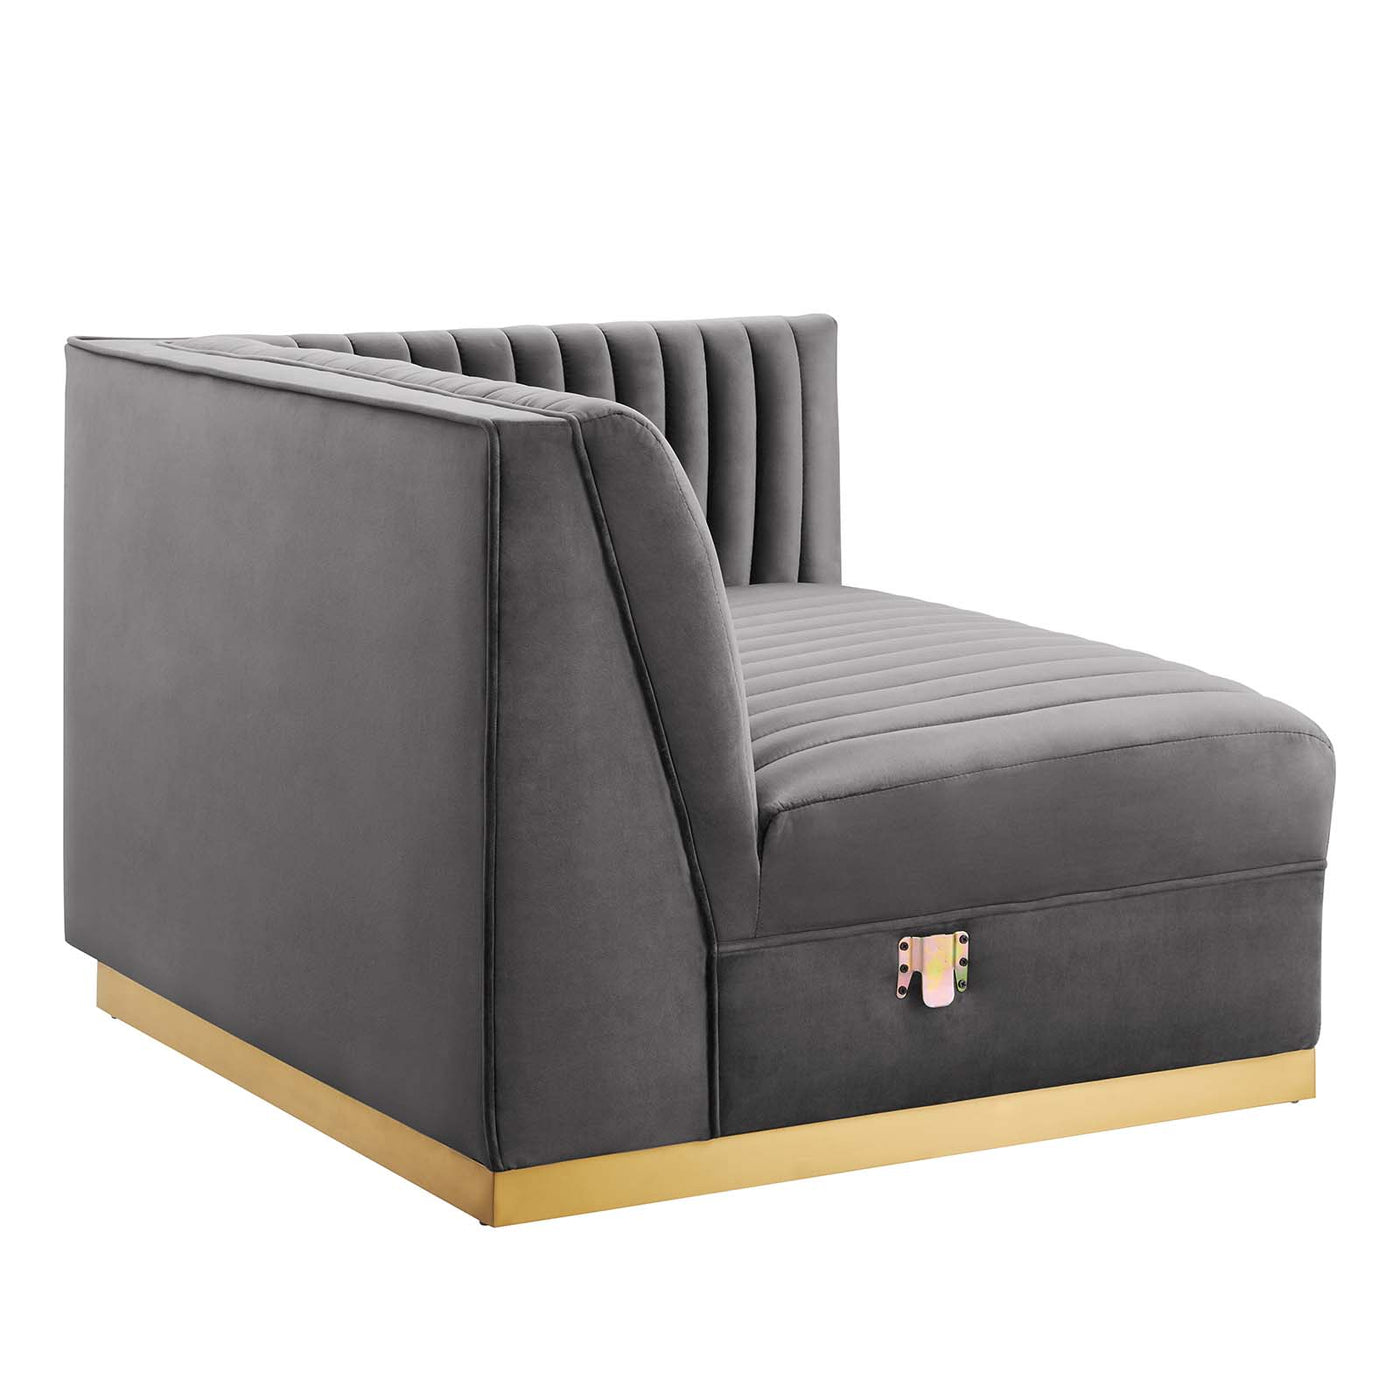 Sanguine Channel Tufted Performance Velvet 4-Seat Modular Sectional Sofa